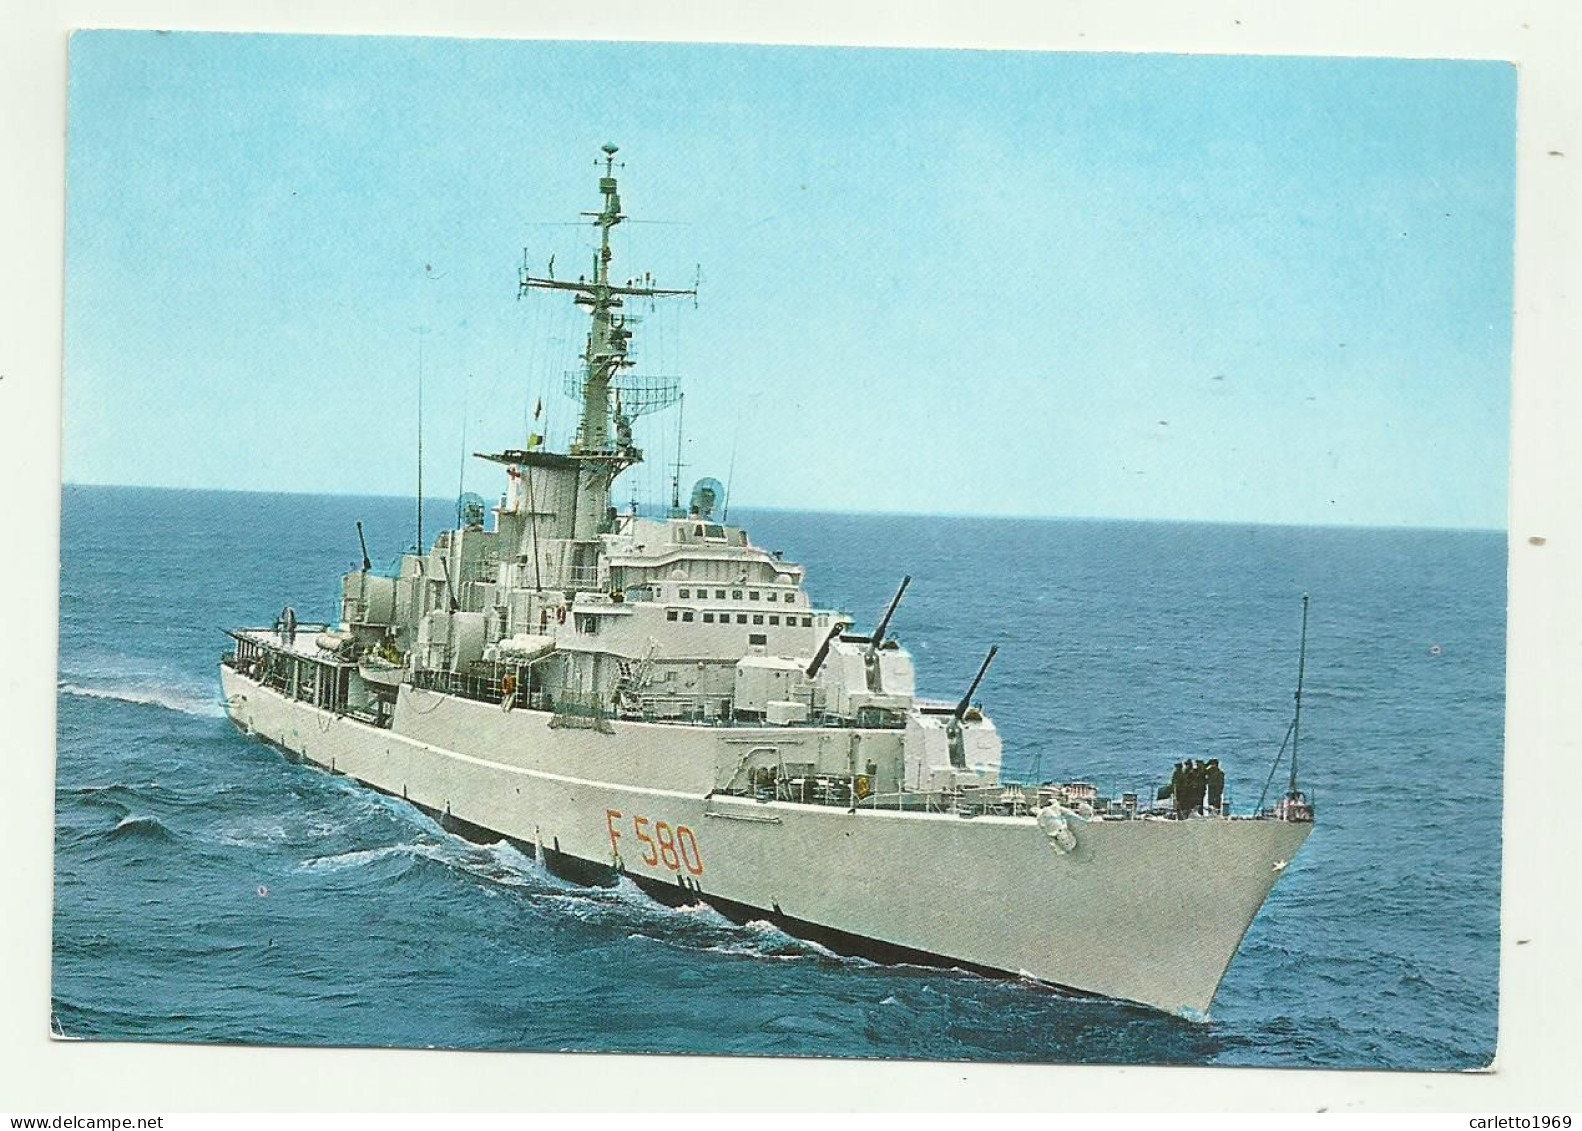 FREGATA PORTAELICOTTERI ALPINO  - NV FG - Warships